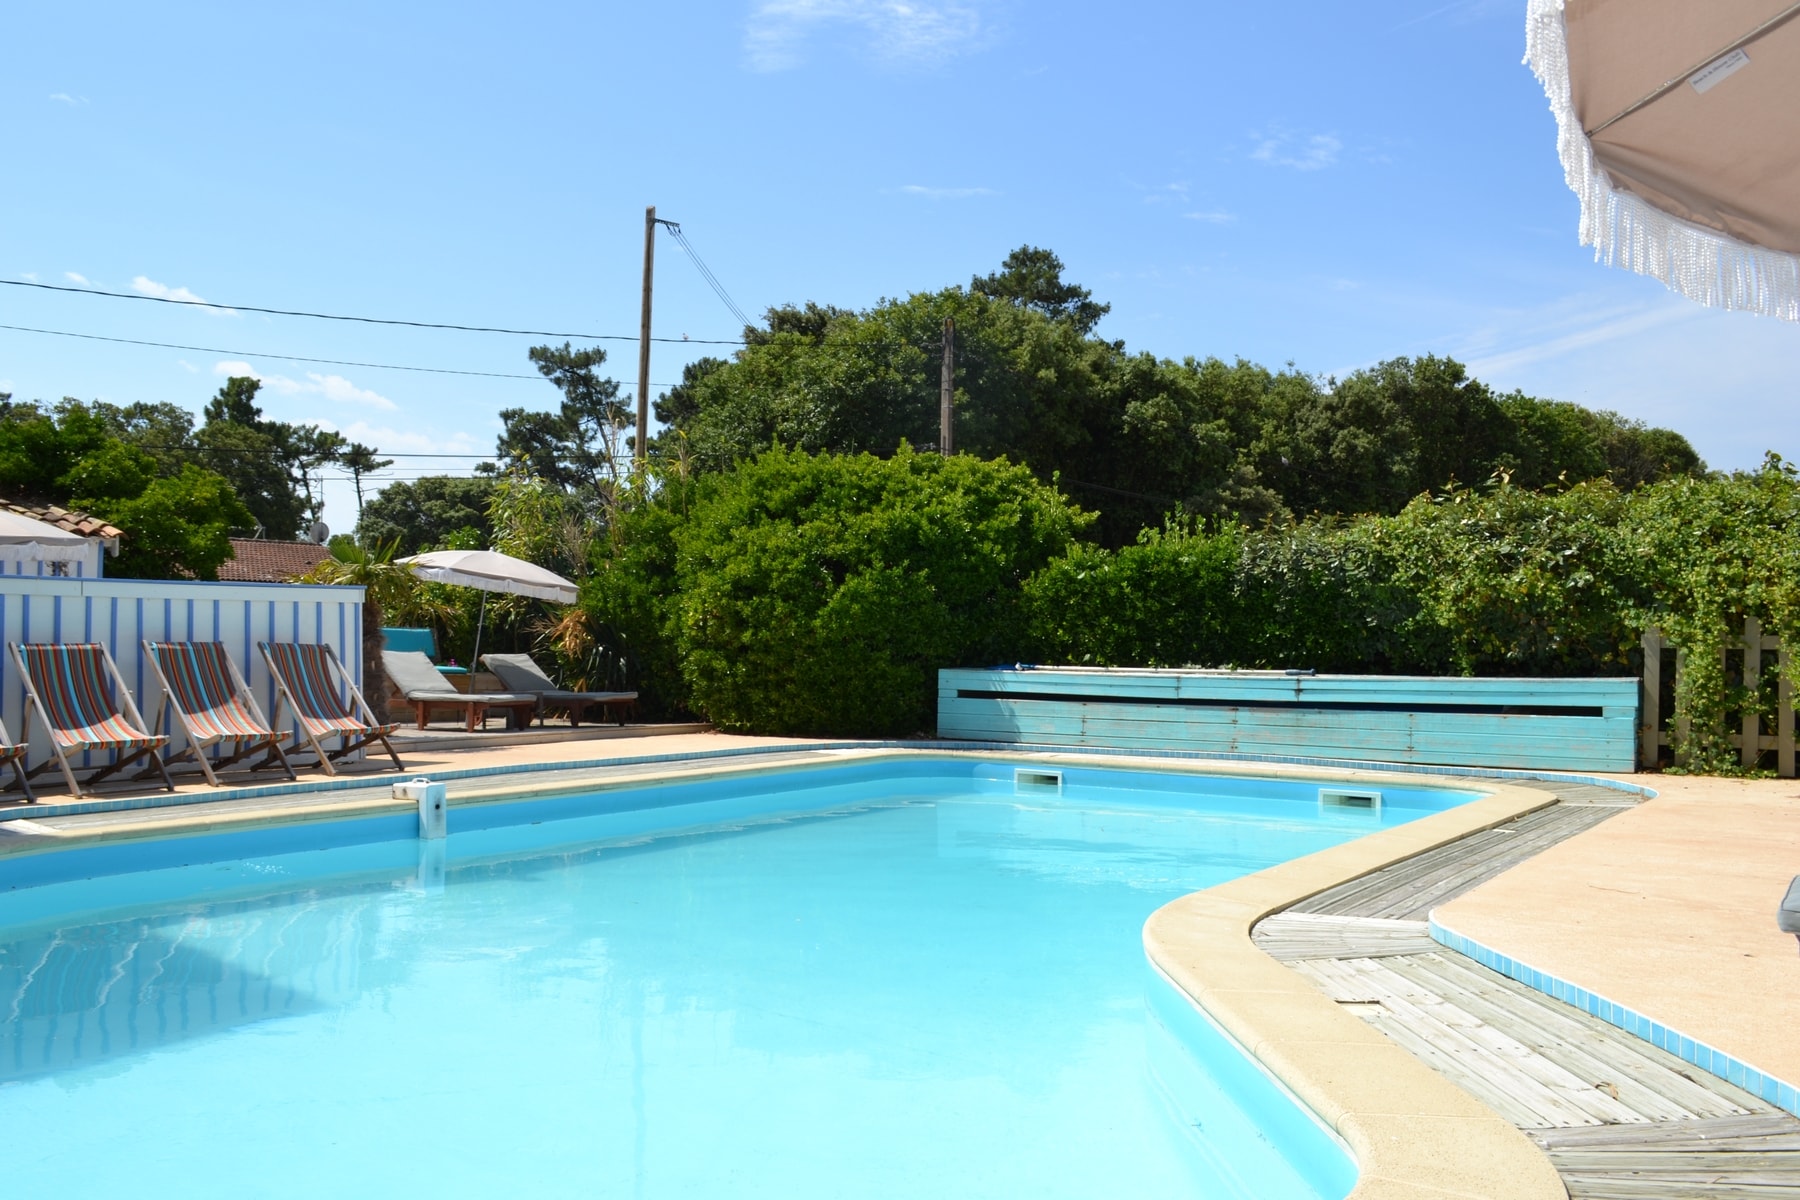 Atlantic hotel - oleron island - 3 stars hotel - swimming-pool